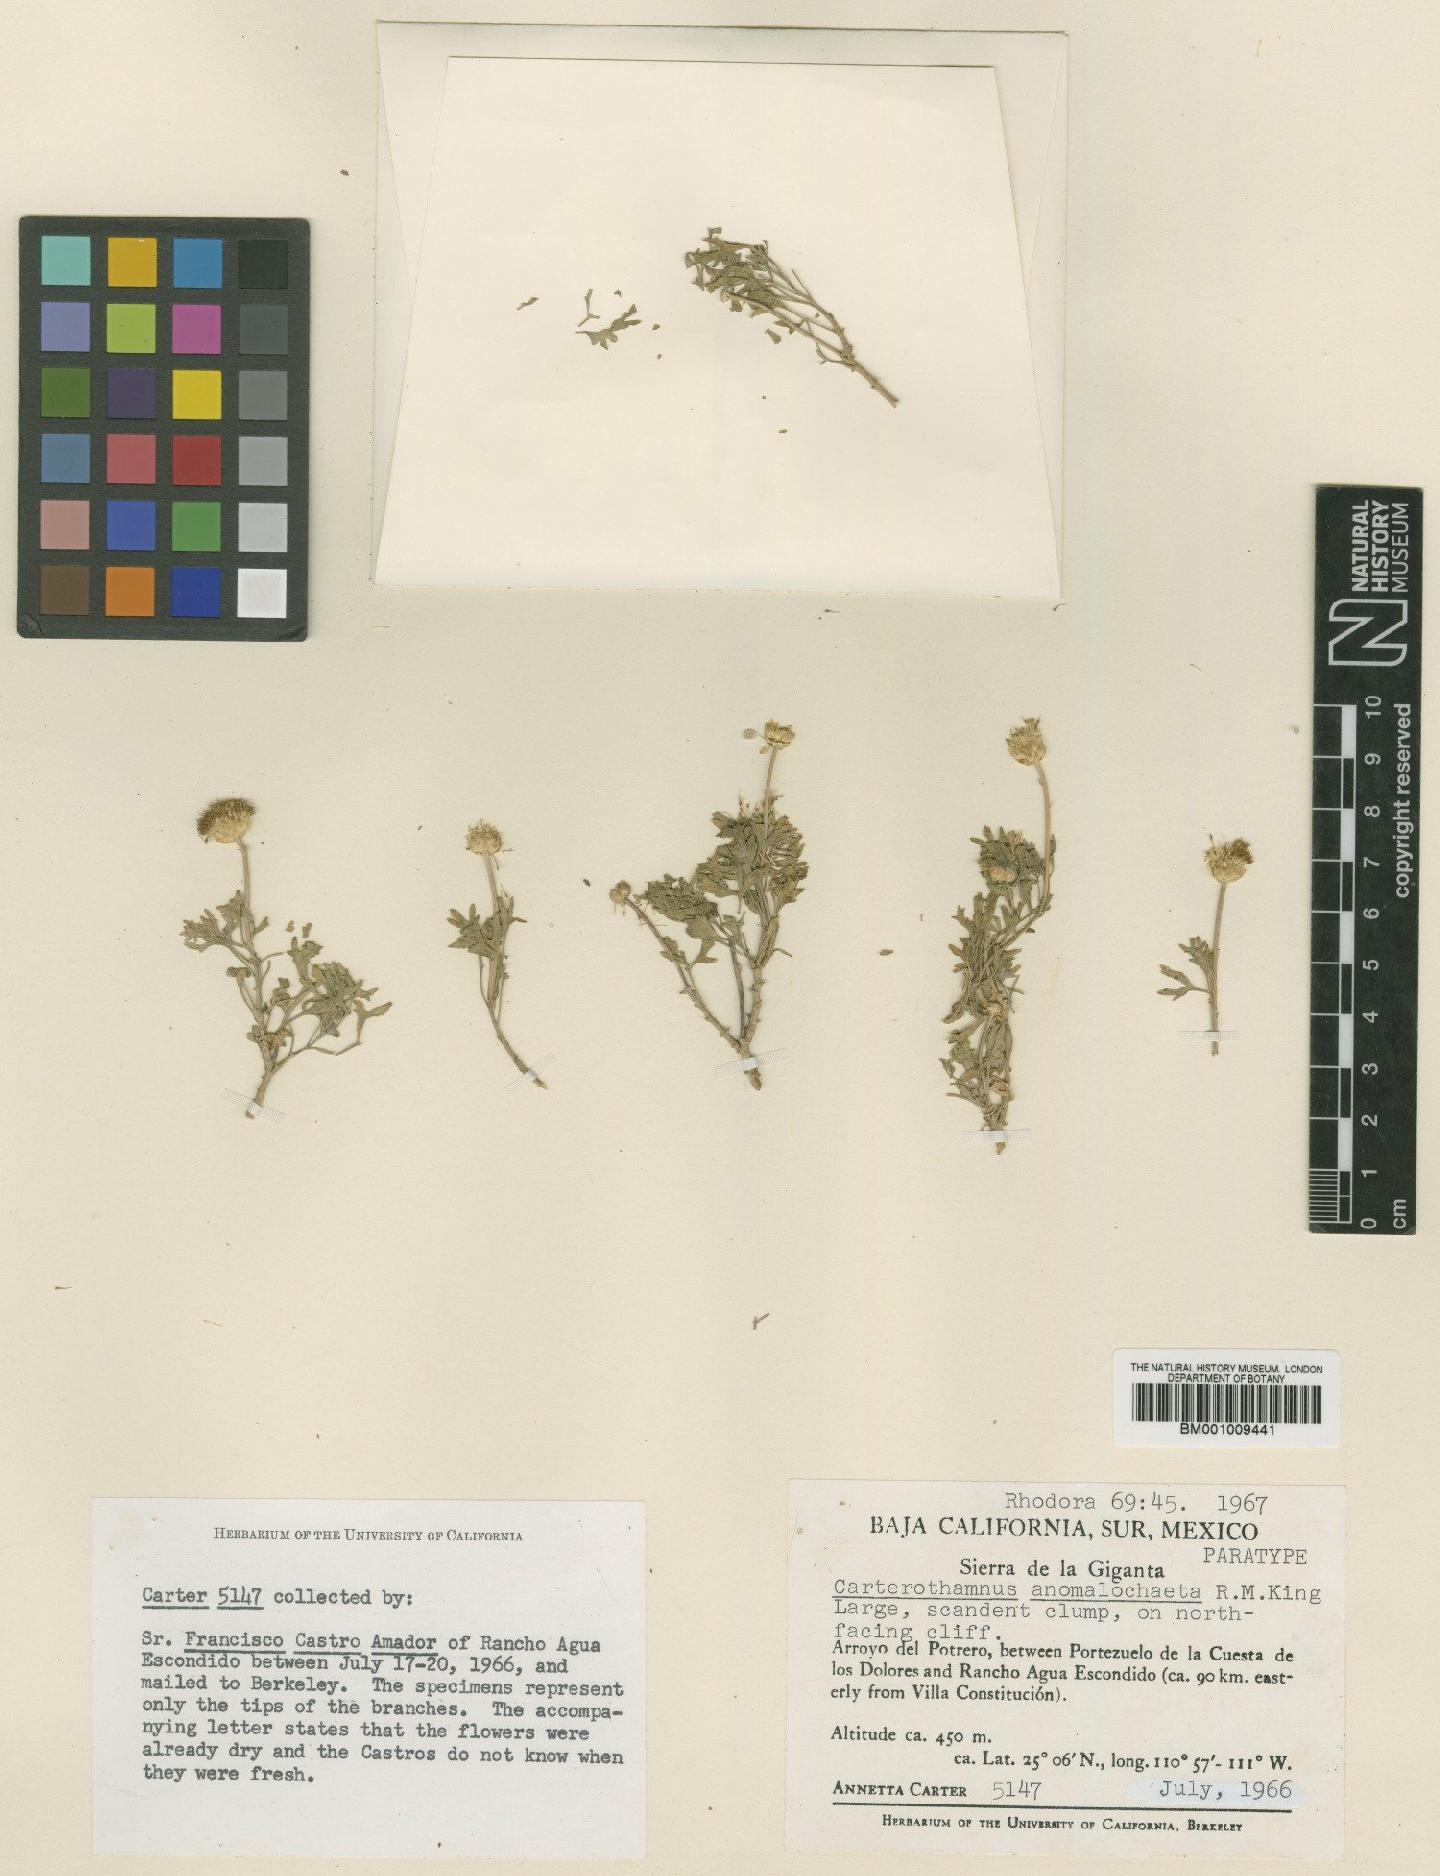 To NHMUK collection (Carterothamnus anomalochaeta R.M.King; Paratype; NHMUK:ecatalogue:610050)